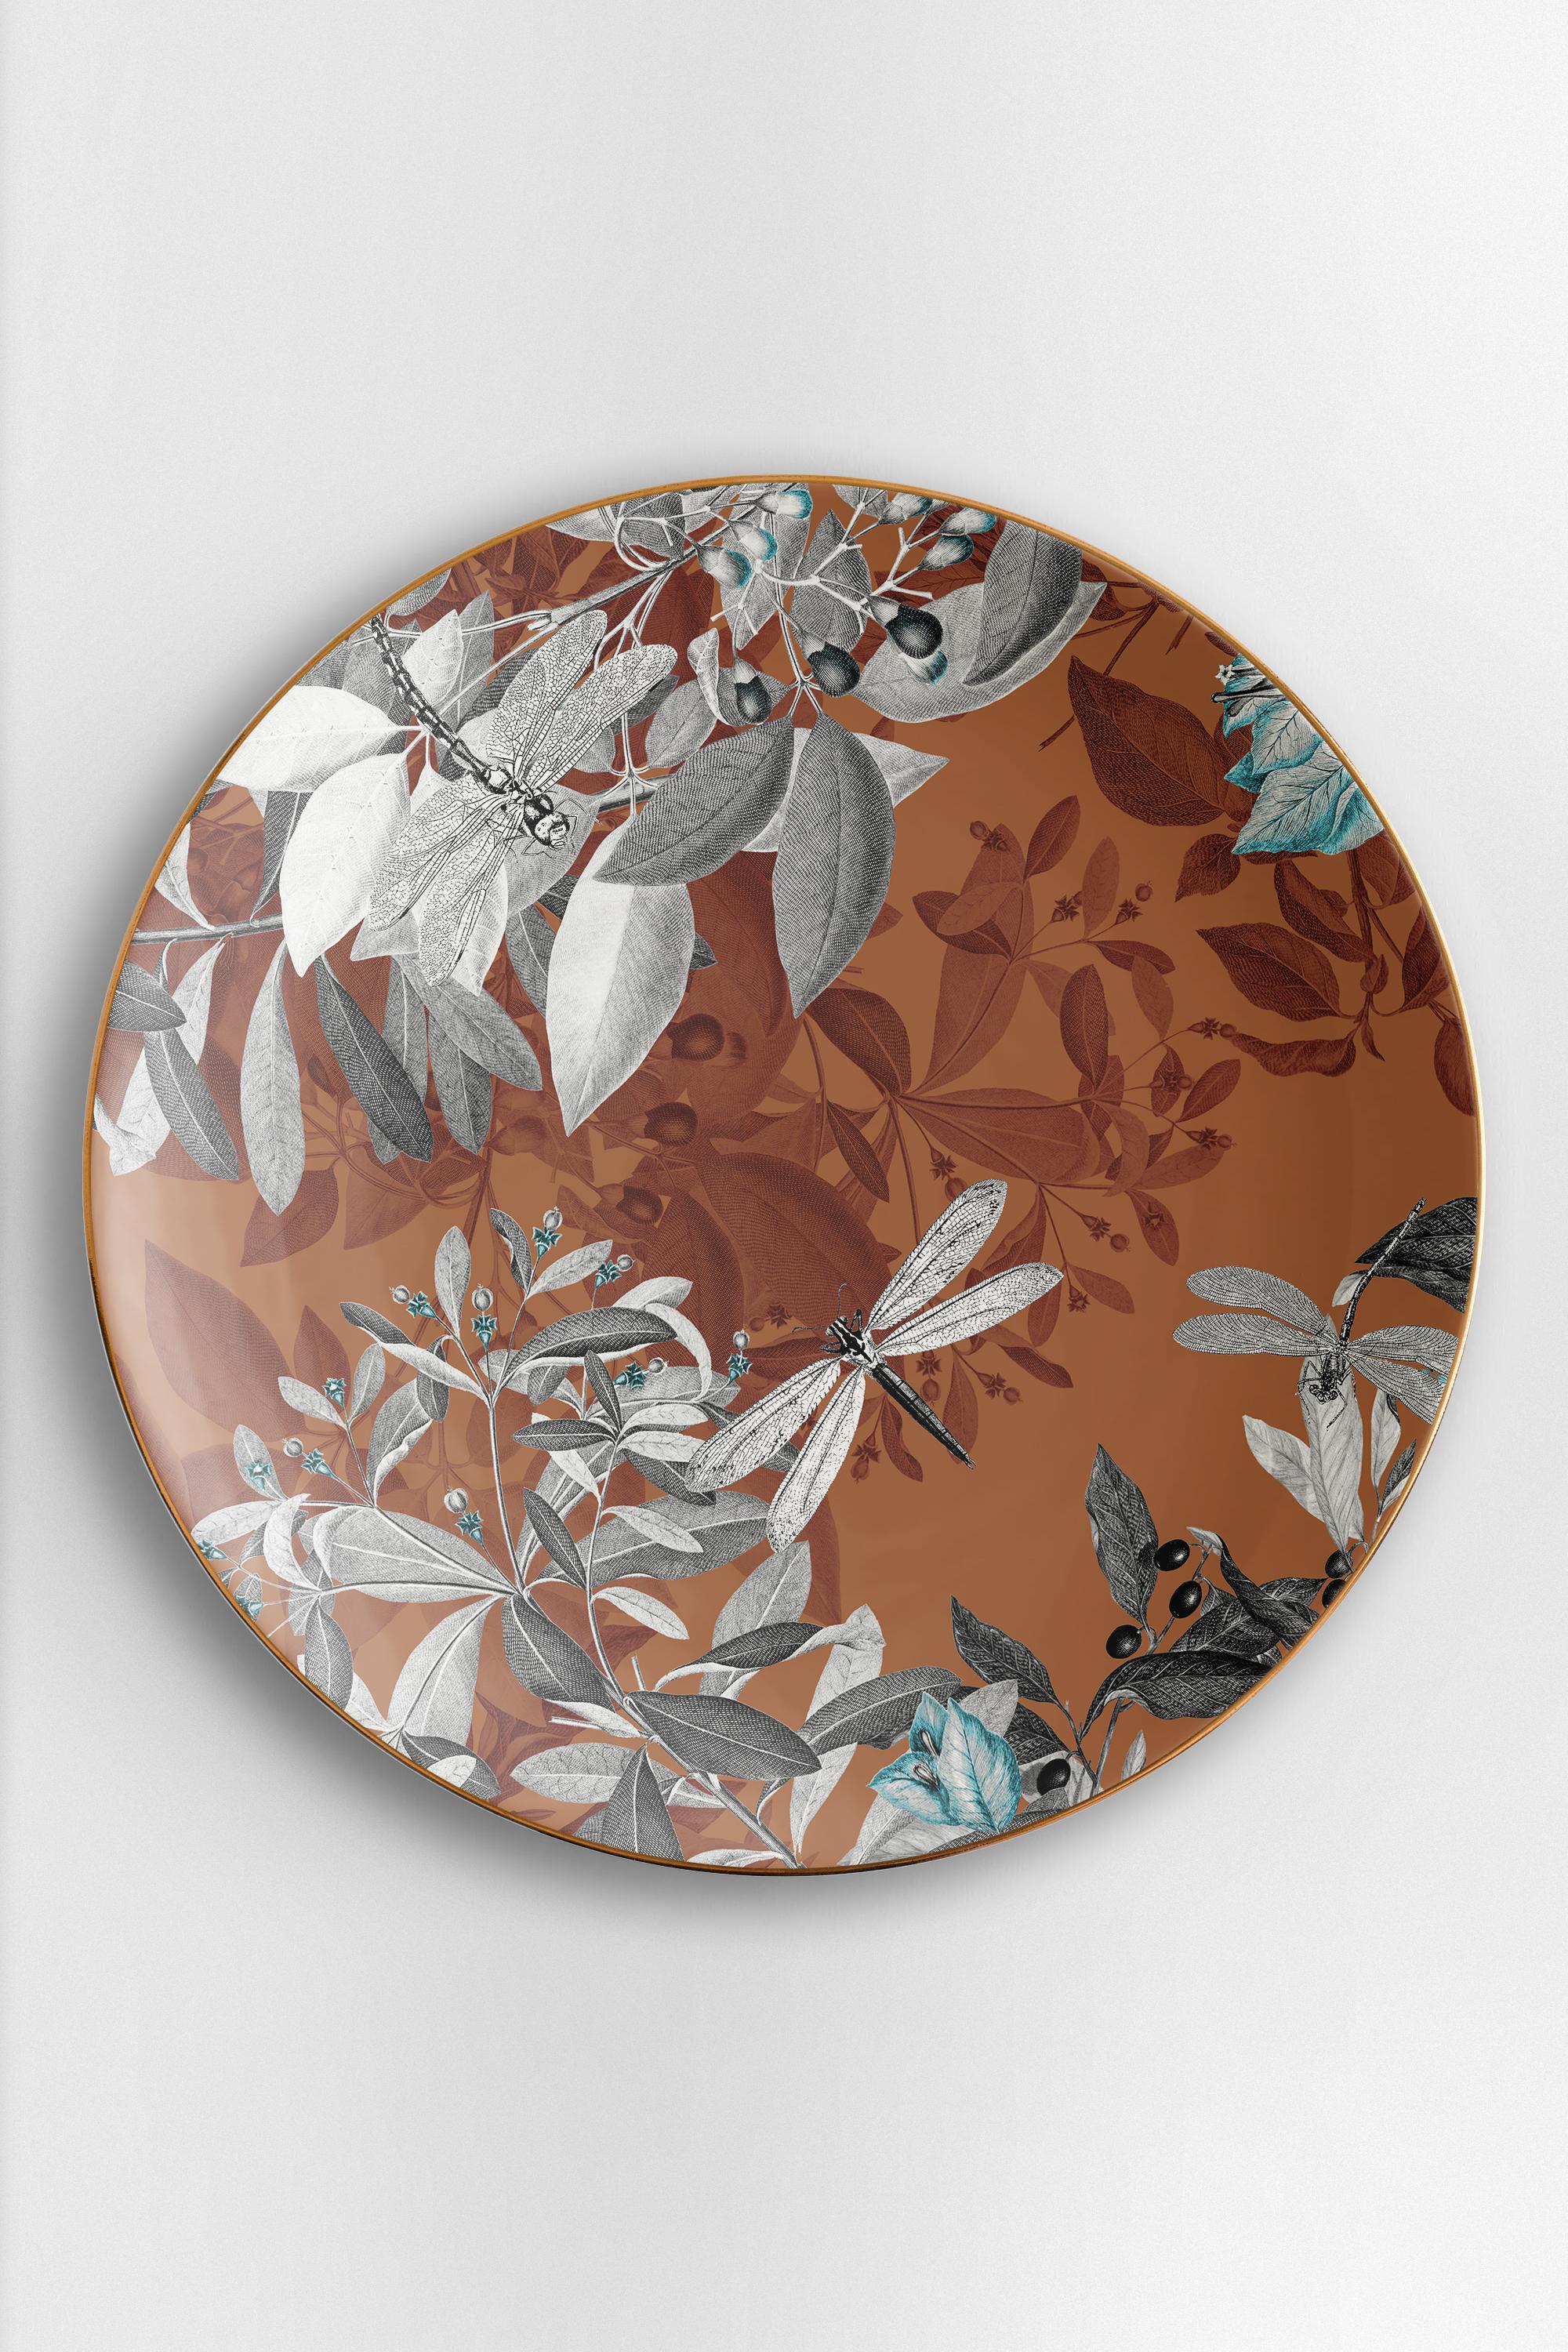 Italian Black Dragon, Six Contemporary Porcelain Dinner Plates with Decorative Design For Sale